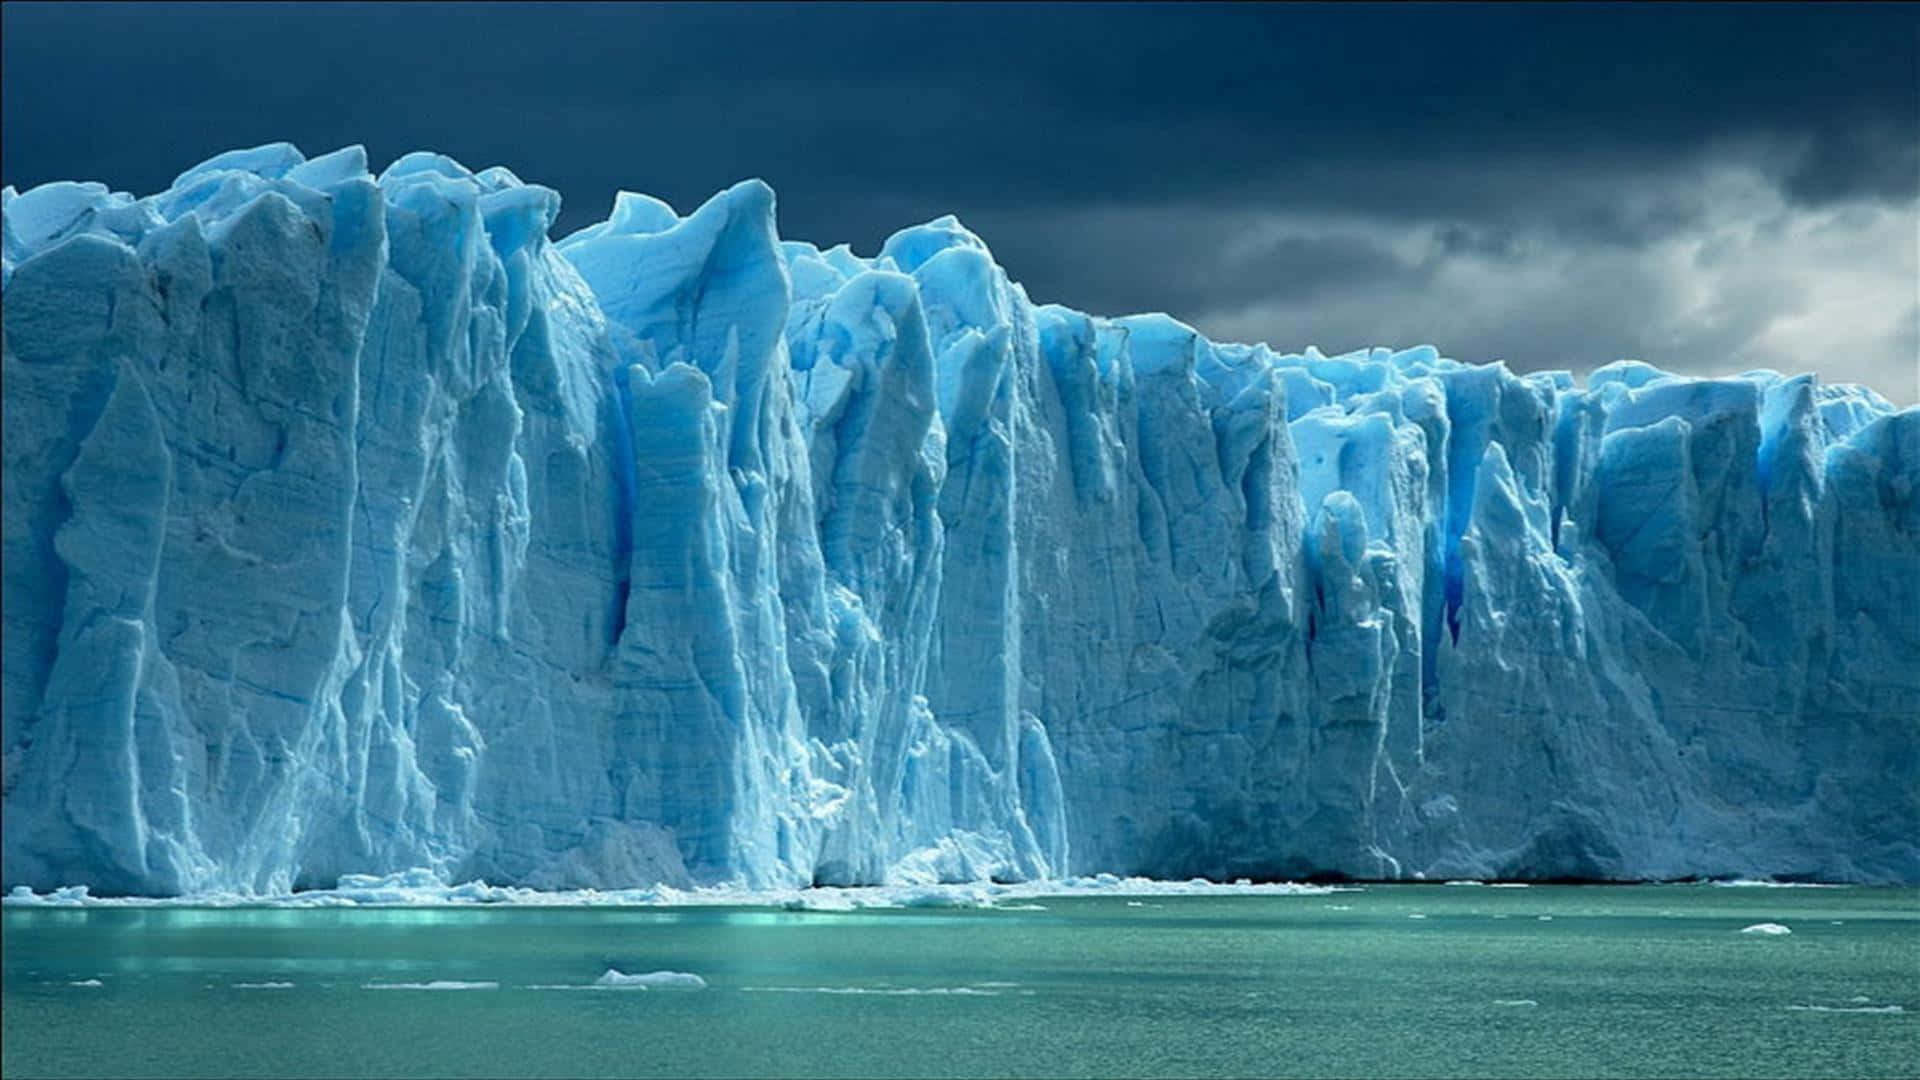 Stunning Iceberg Floating on Crystalline Blue Waters Wallpaper